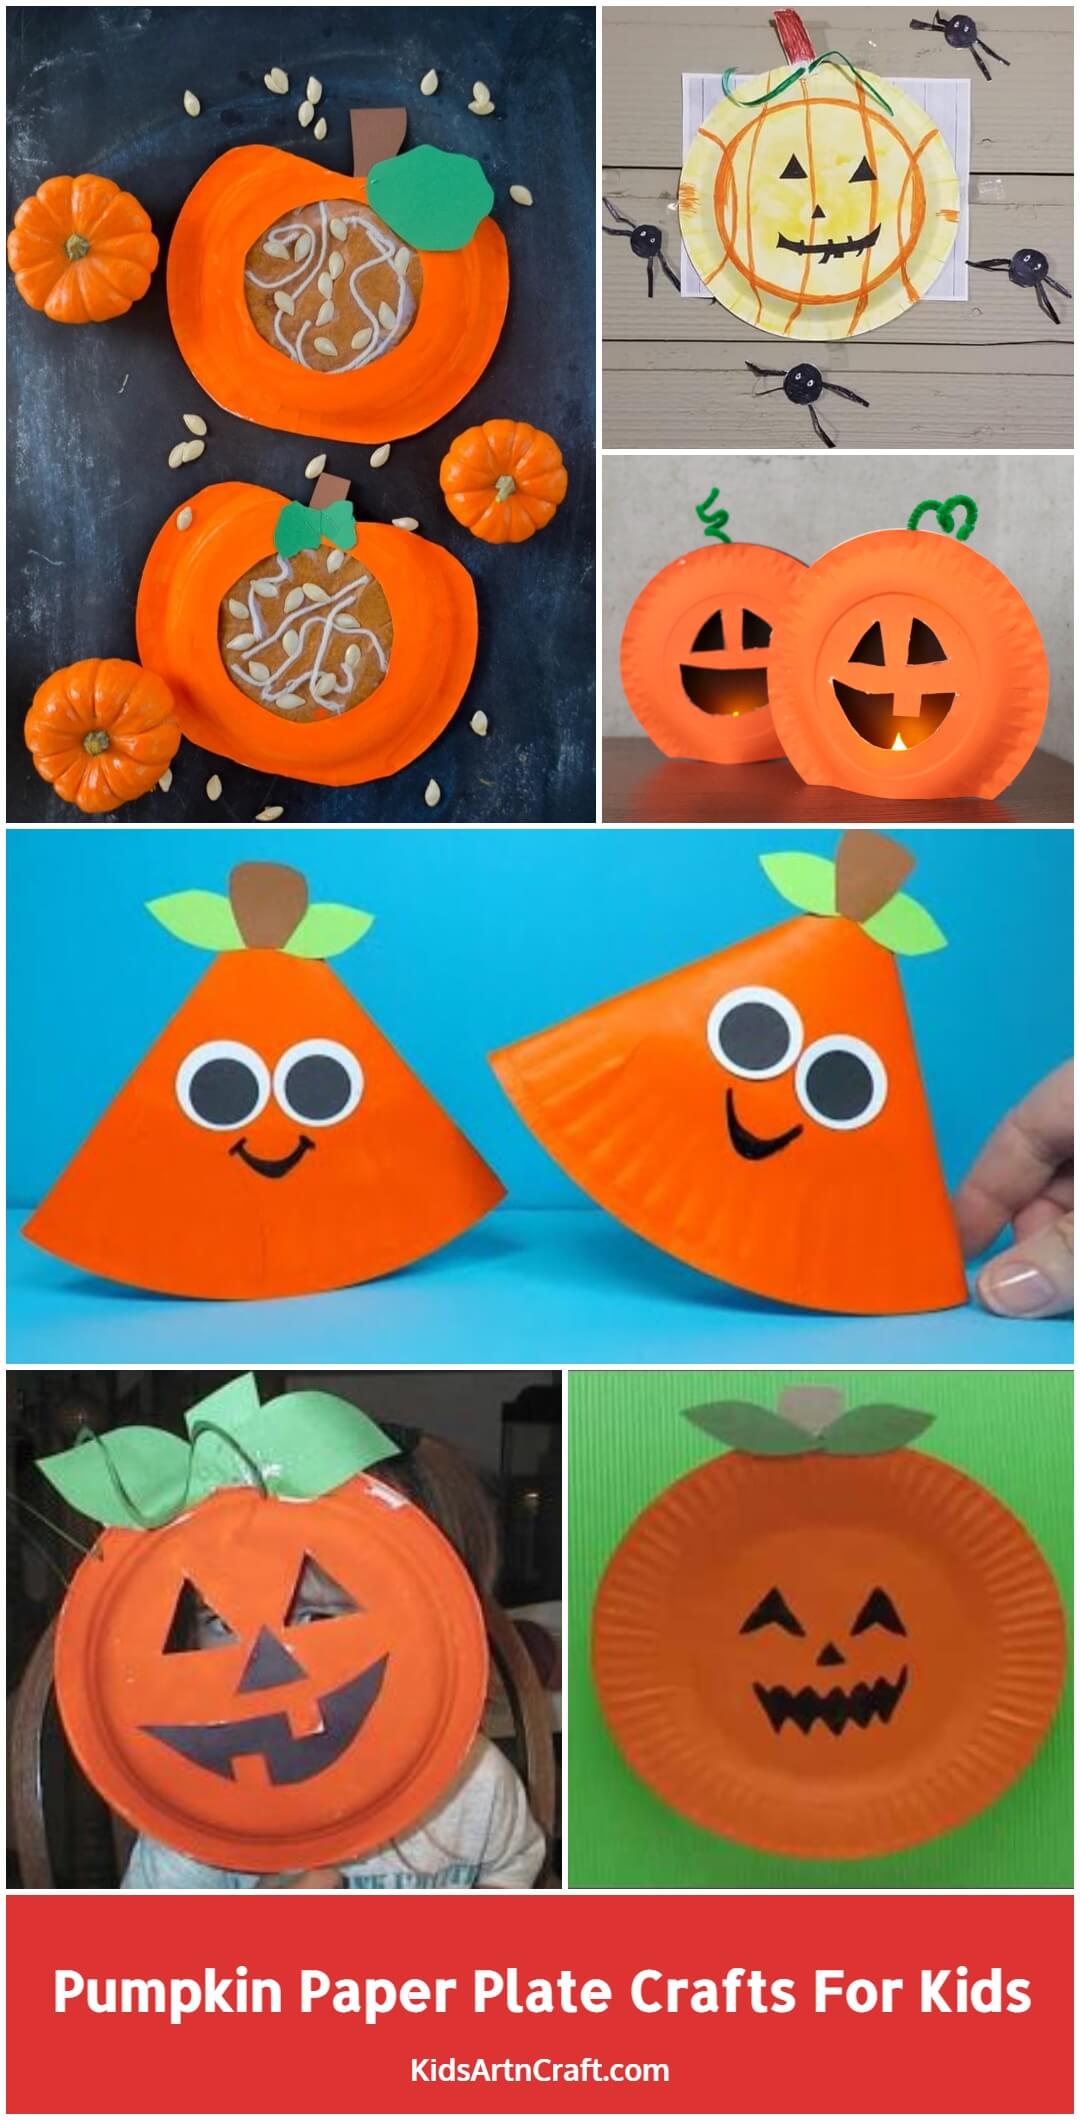  Pumpkin Paper Plate Crafts for Kids